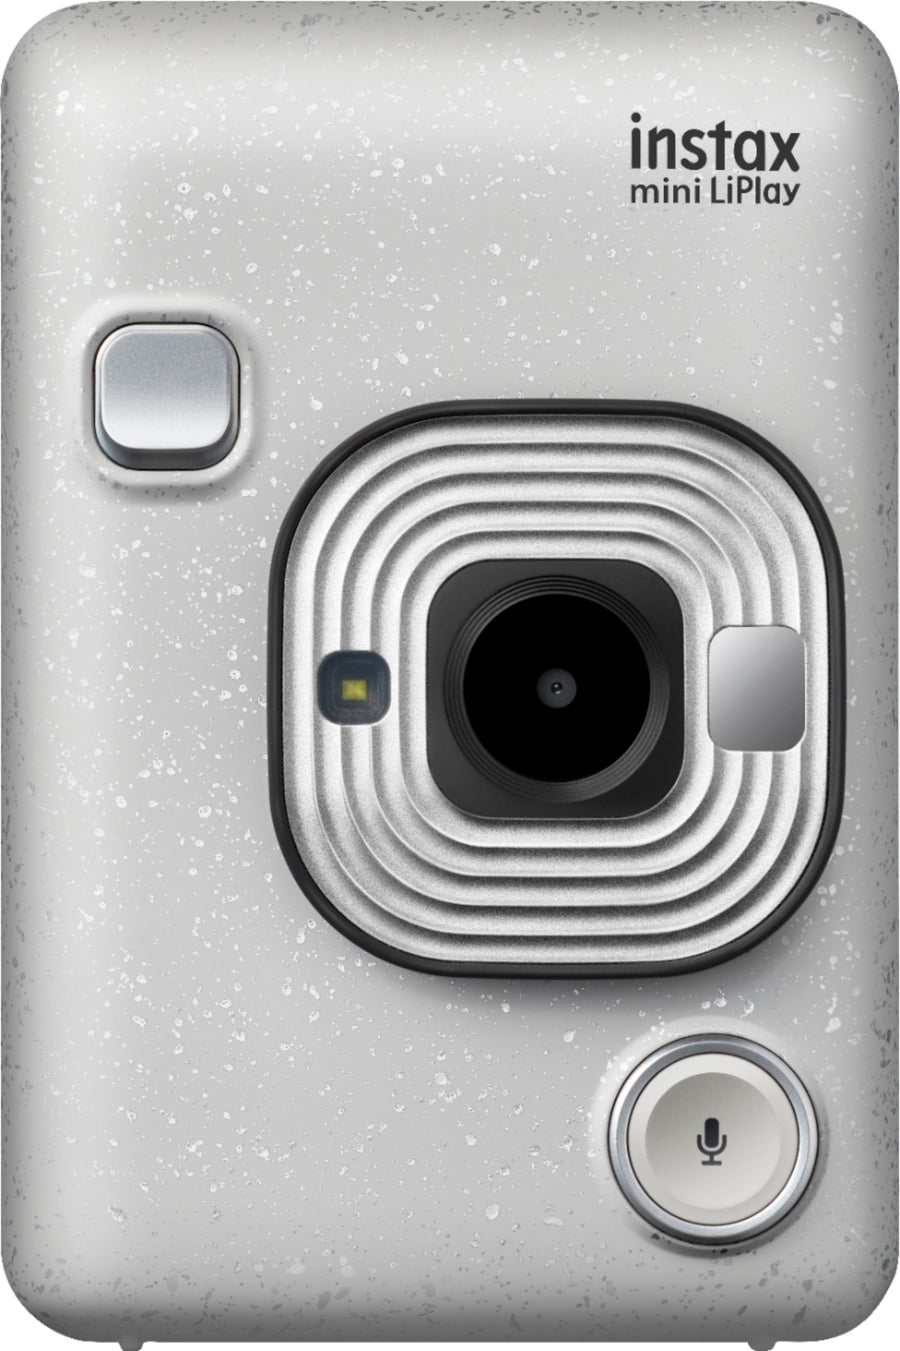 Fujifilm - instax mini LiPlay Instant Film Camera - Stone White_0